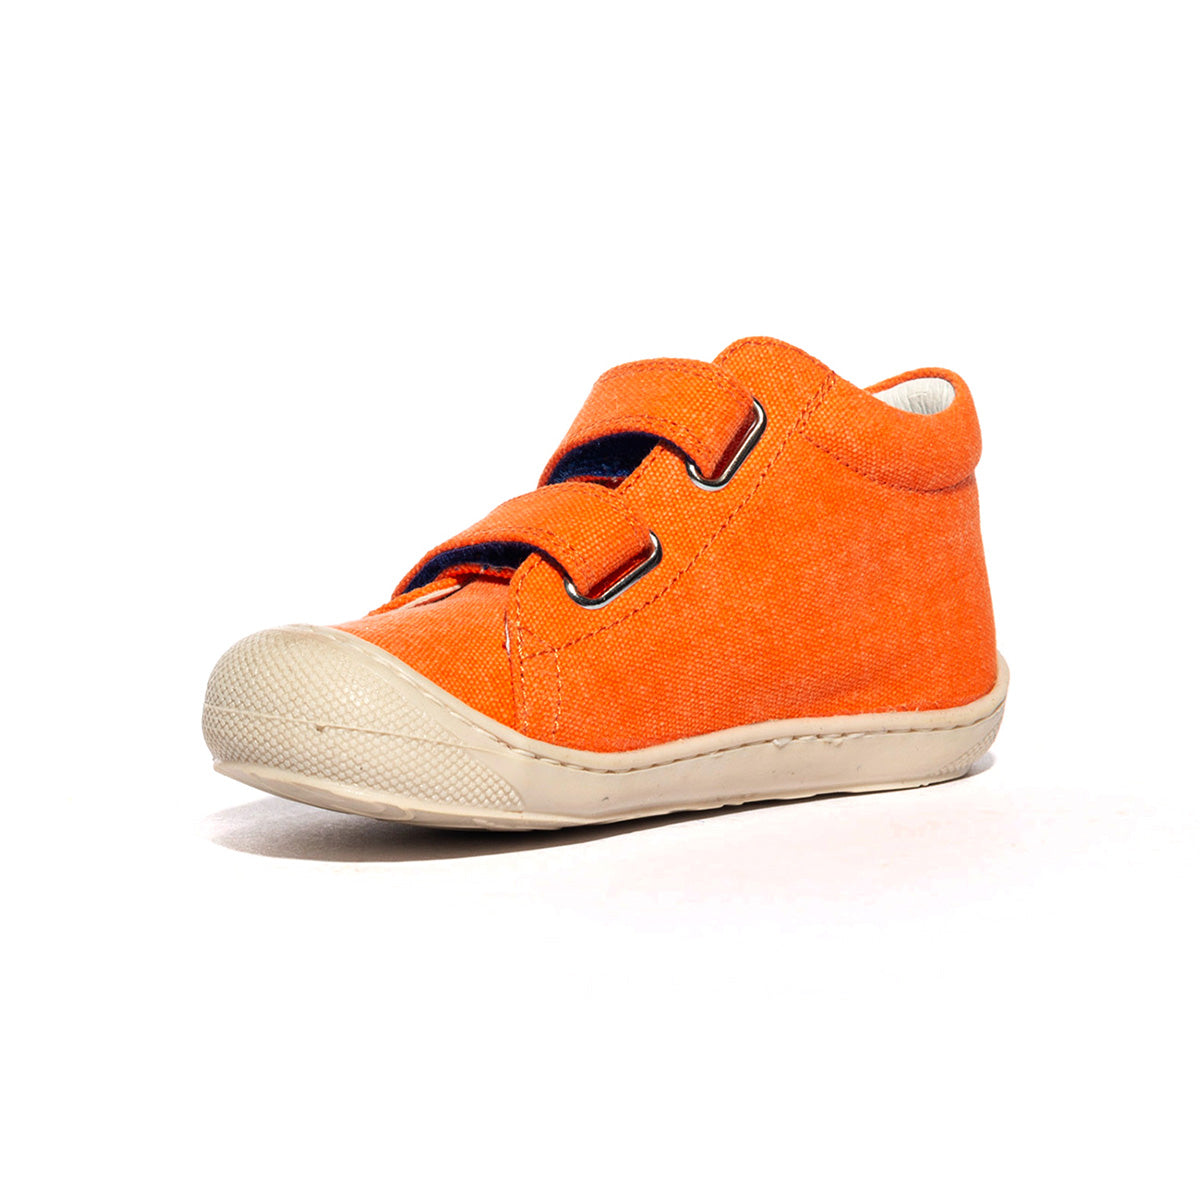 Sneakers Naturino Cocoon Arancioni